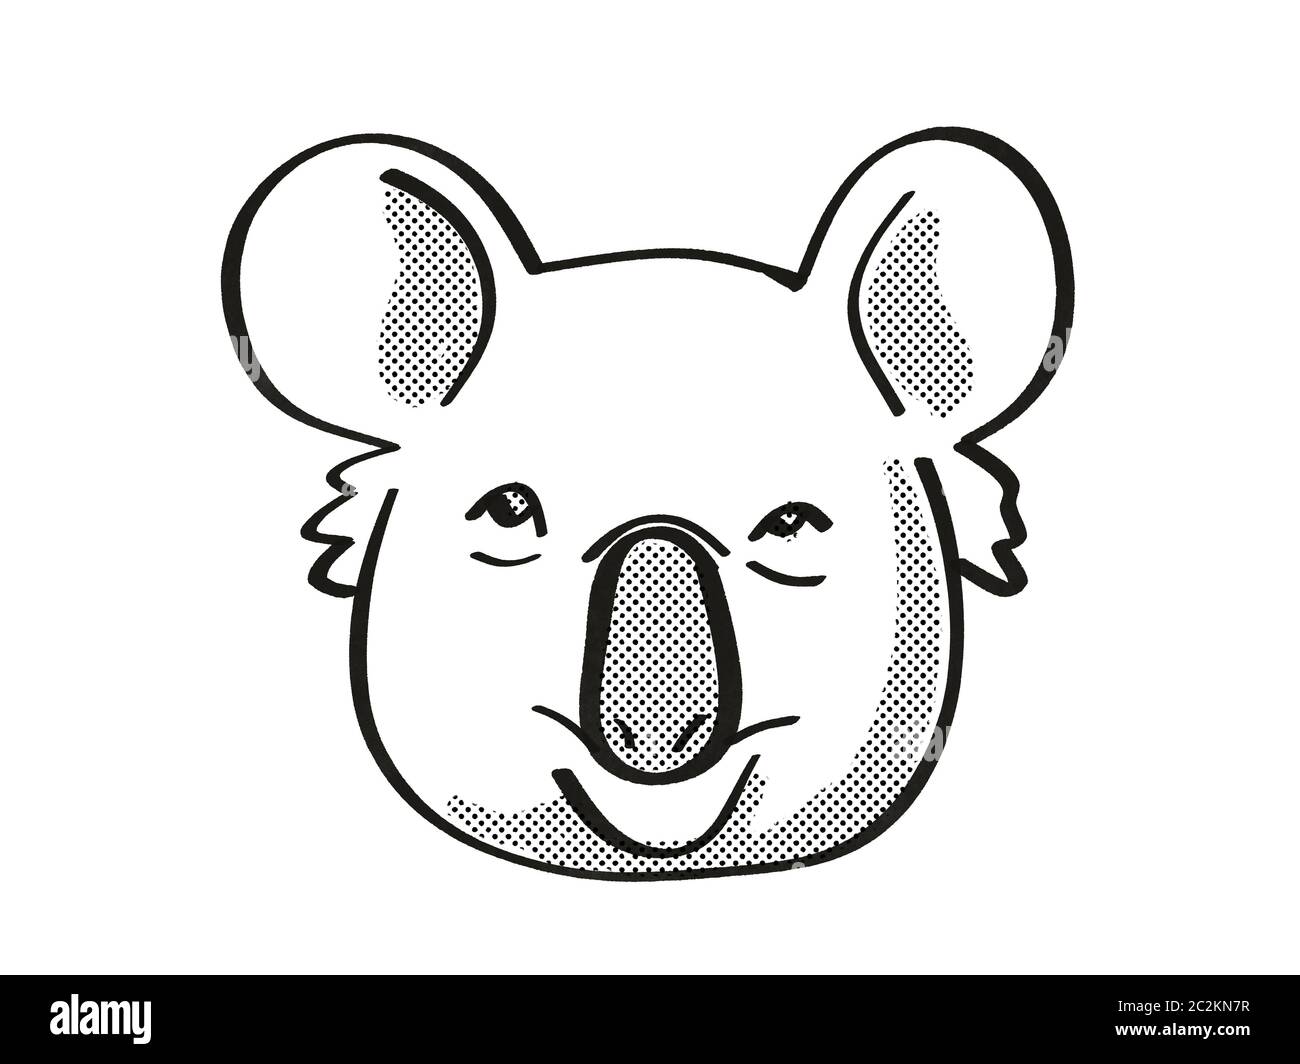 Koala portrait hand drawn sketch illustration, Wild animals Stock Vector  Image & Art - Alamy